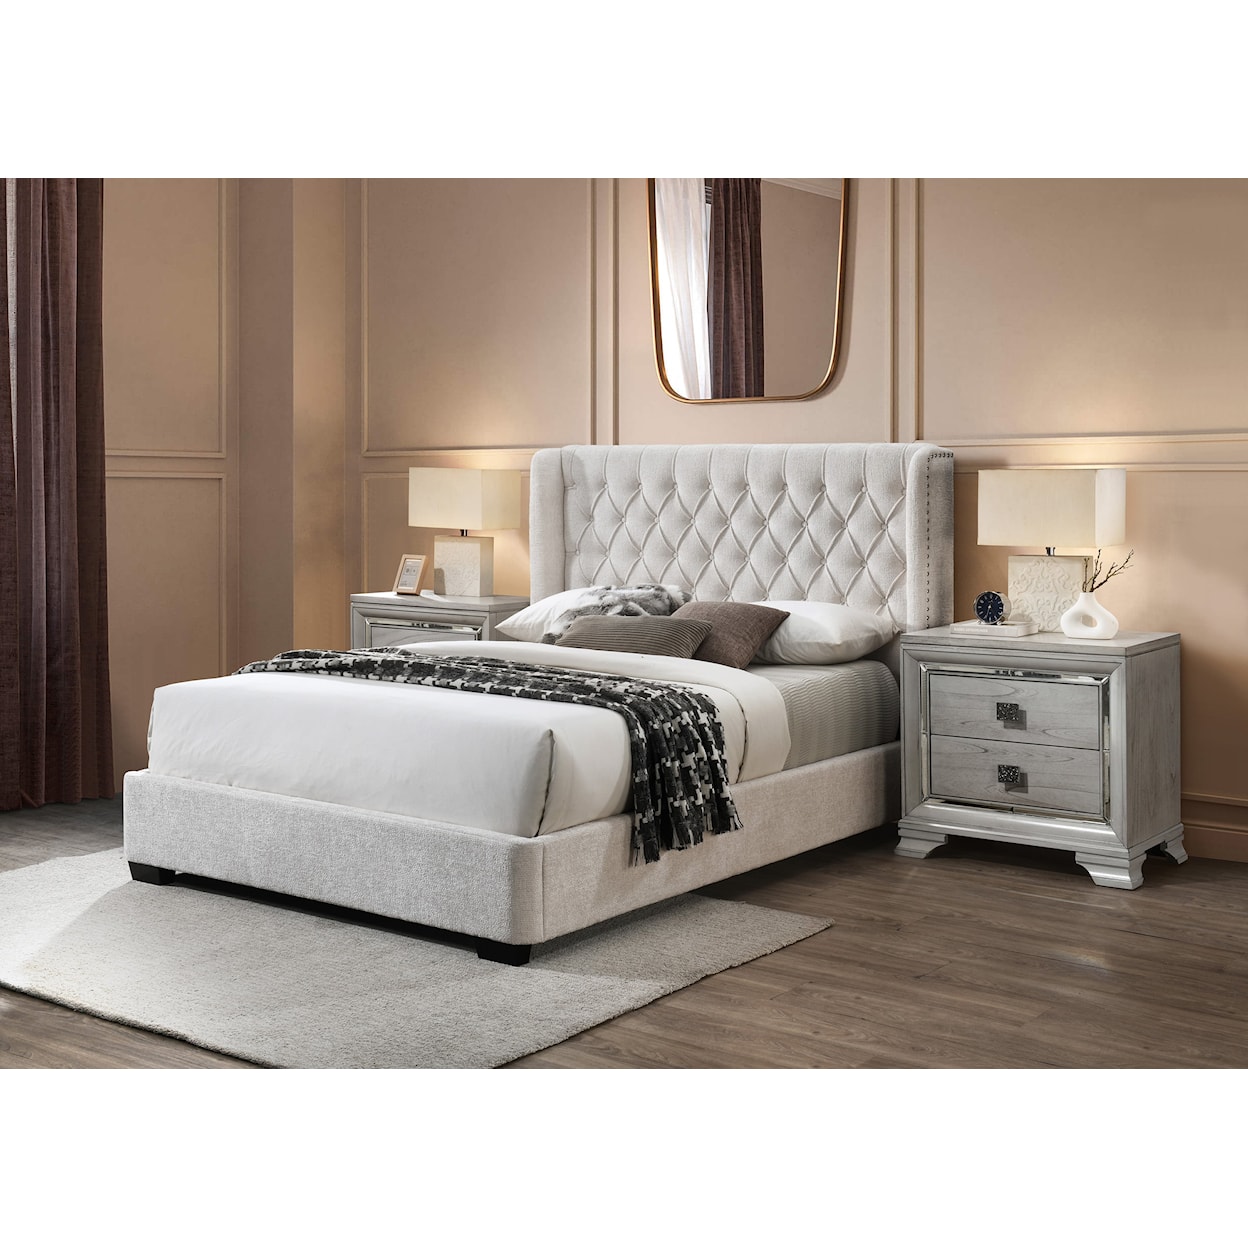 CM DAPHNE Queen Upholstered Bed